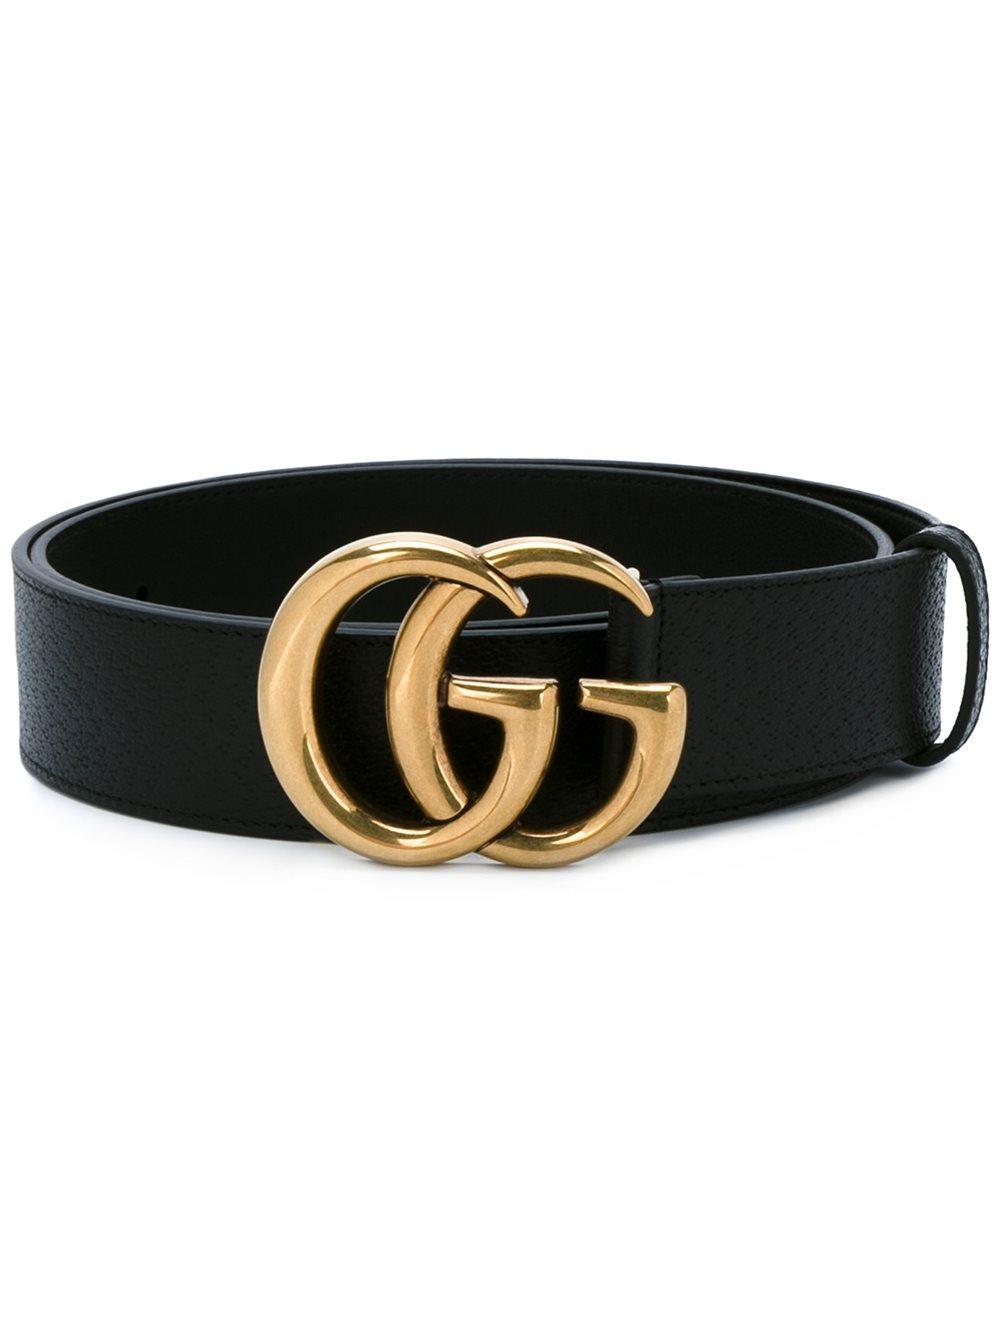 Lyst - Gucci Logo Buckle Belt in Black for Men